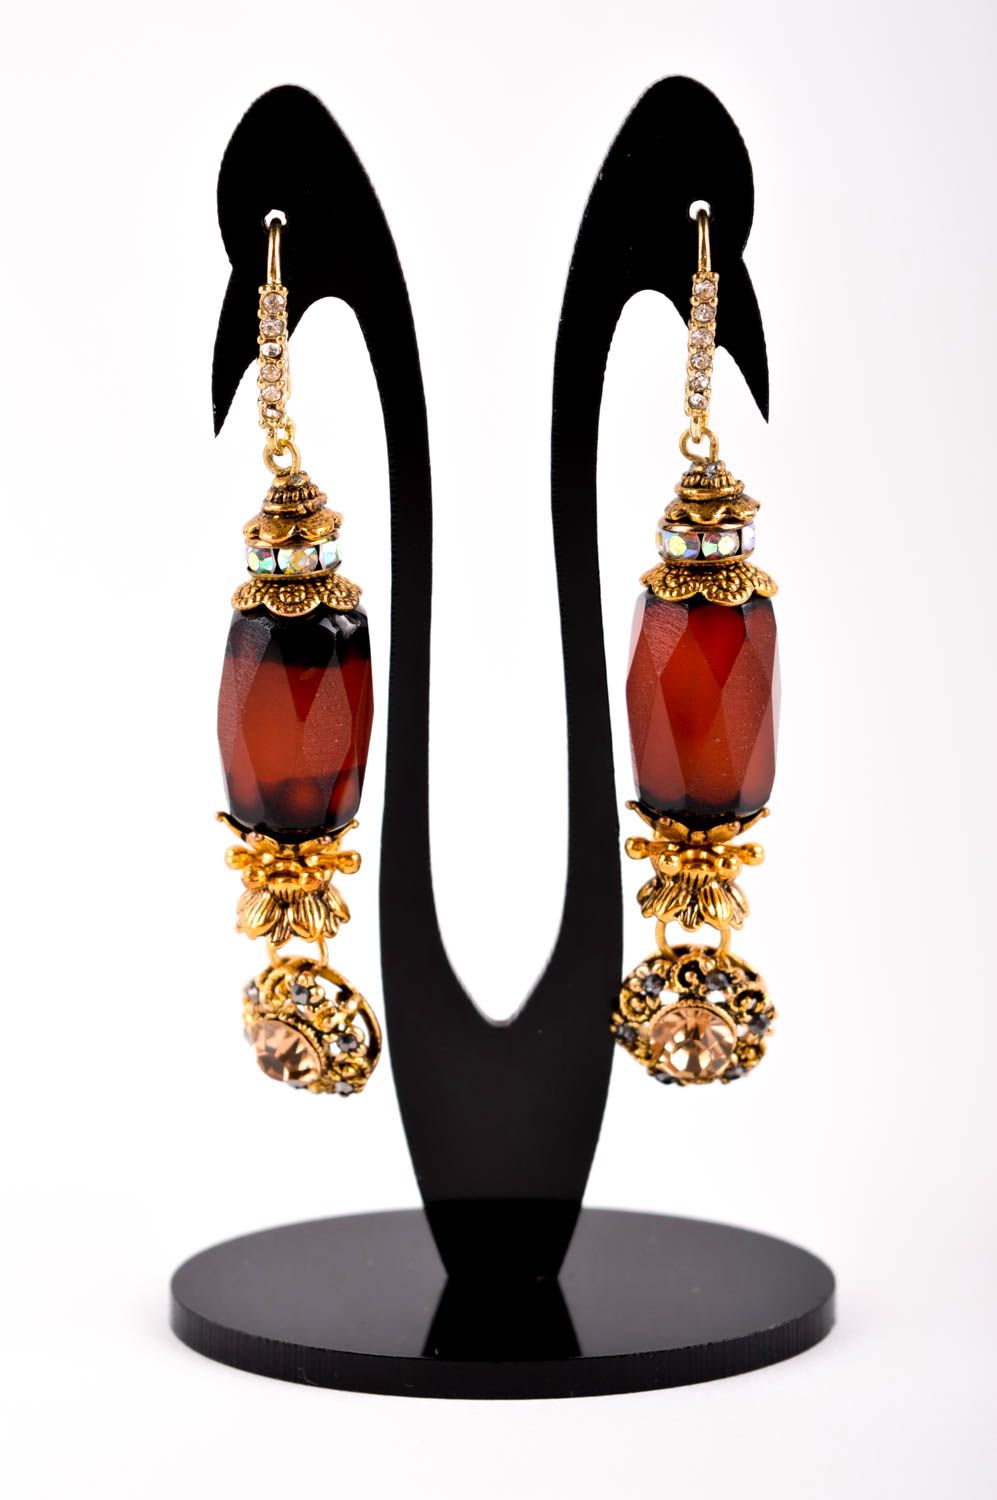 Handmade earrings designer earrings with stones unusual jewelry gift for her photo 2